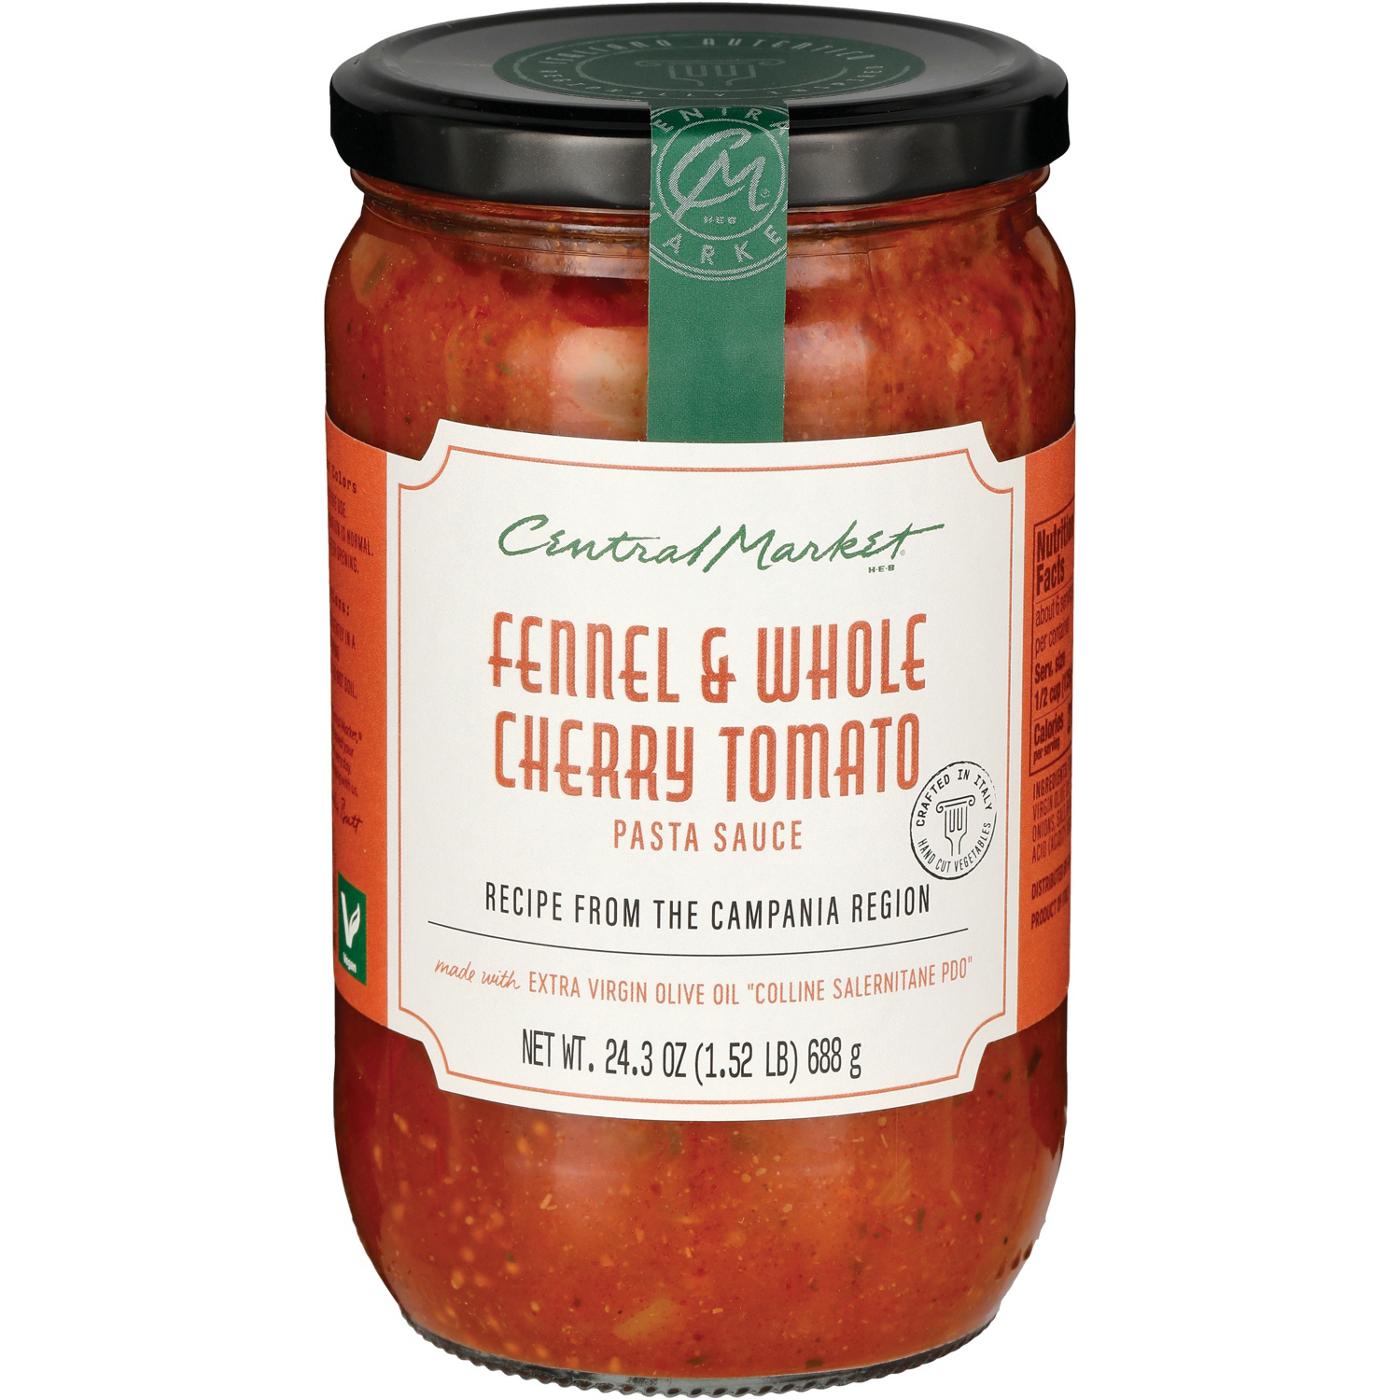 Central Market Campania Fennel & Whole Cherry Tomato Pasta Sauce; image 1 of 2